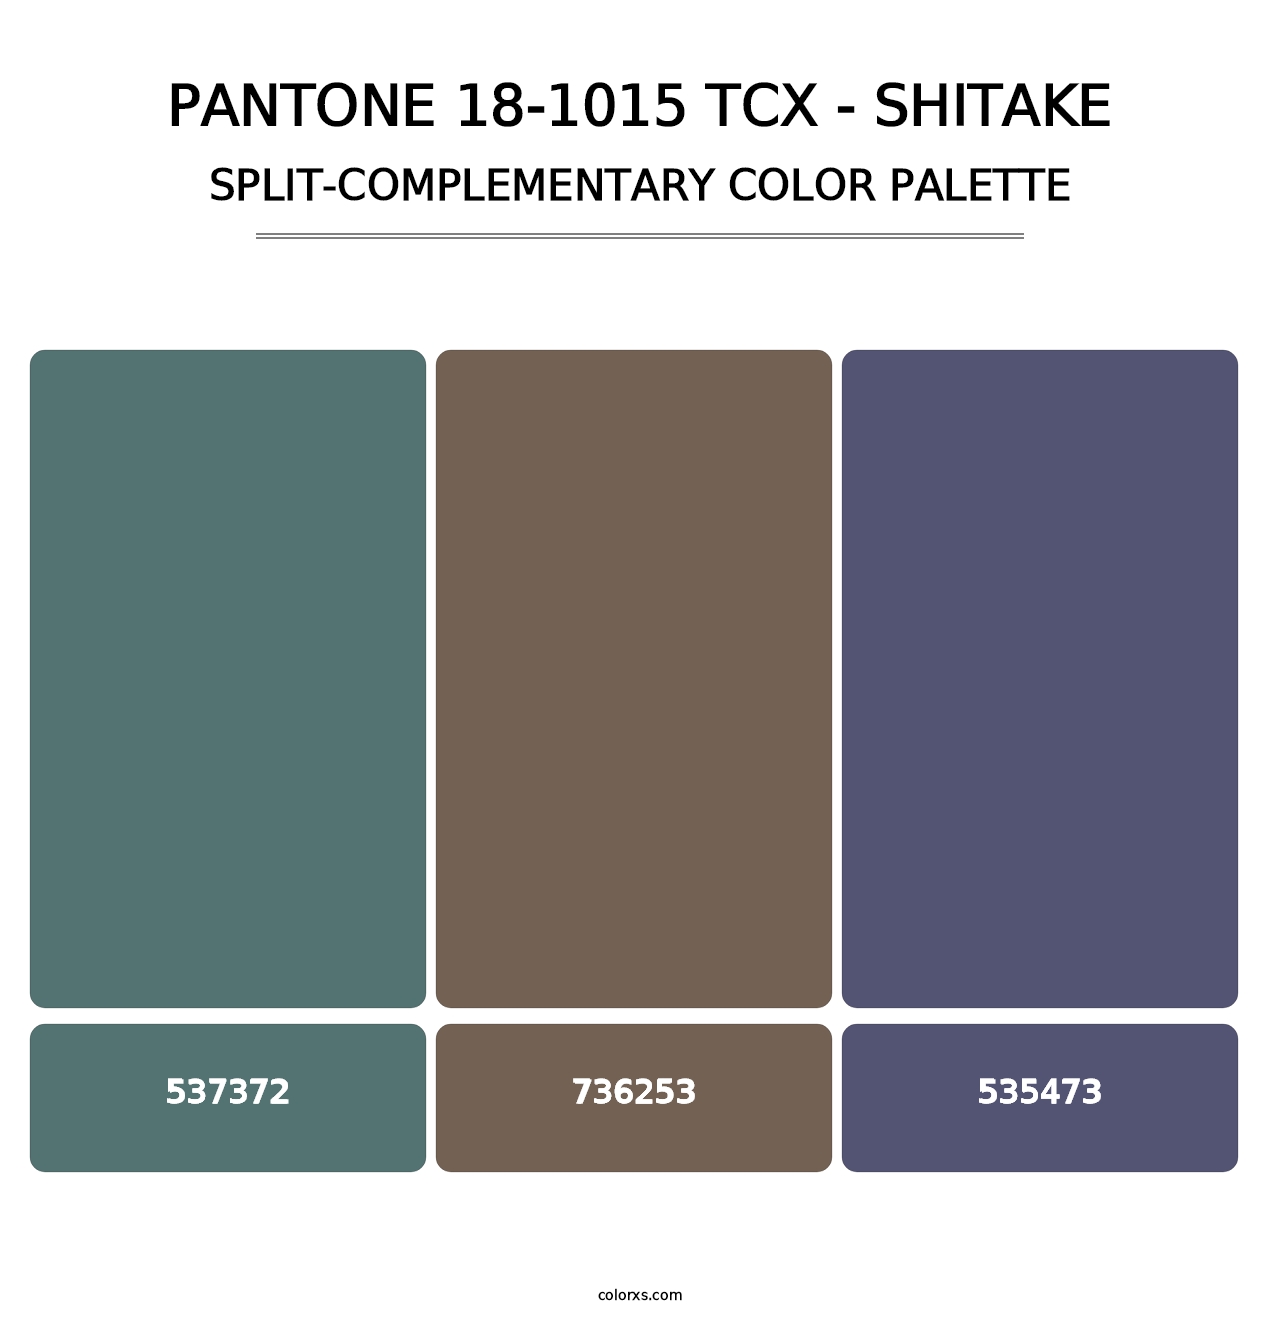 PANTONE 18-1015 TCX - Shitake - Split-Complementary Color Palette